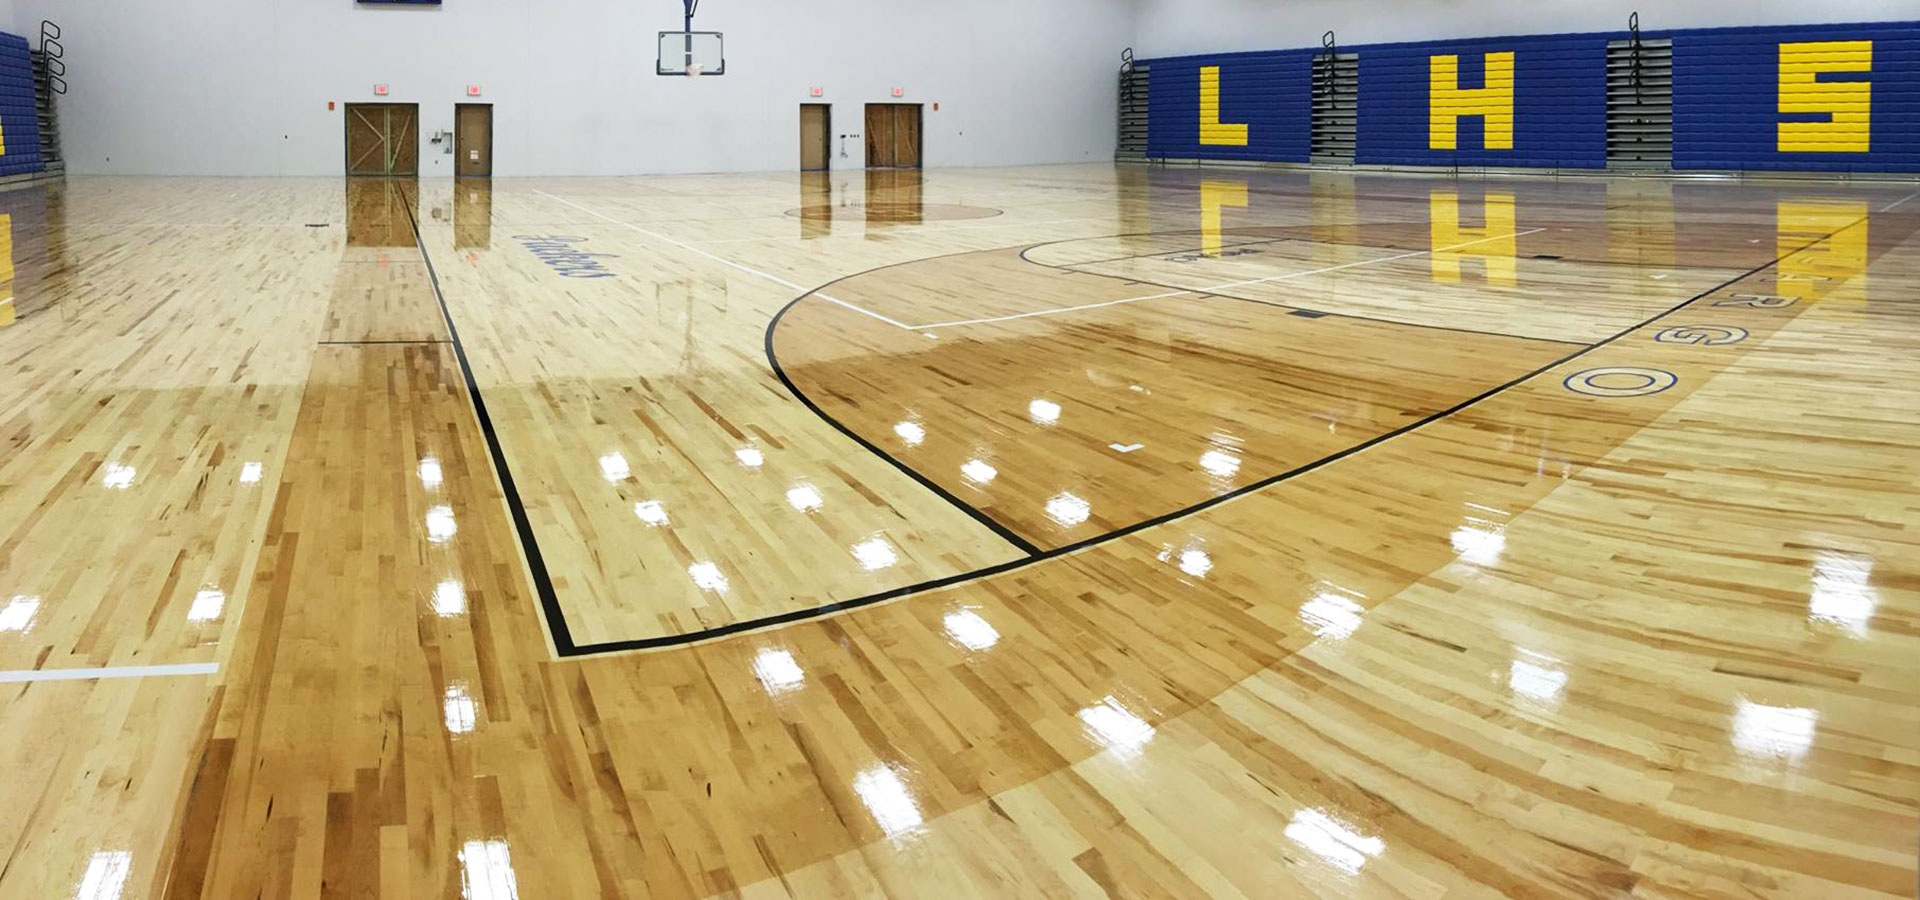 Athletic Flooring New Smyrna Beach And, Laminate Flooring Basketball Court